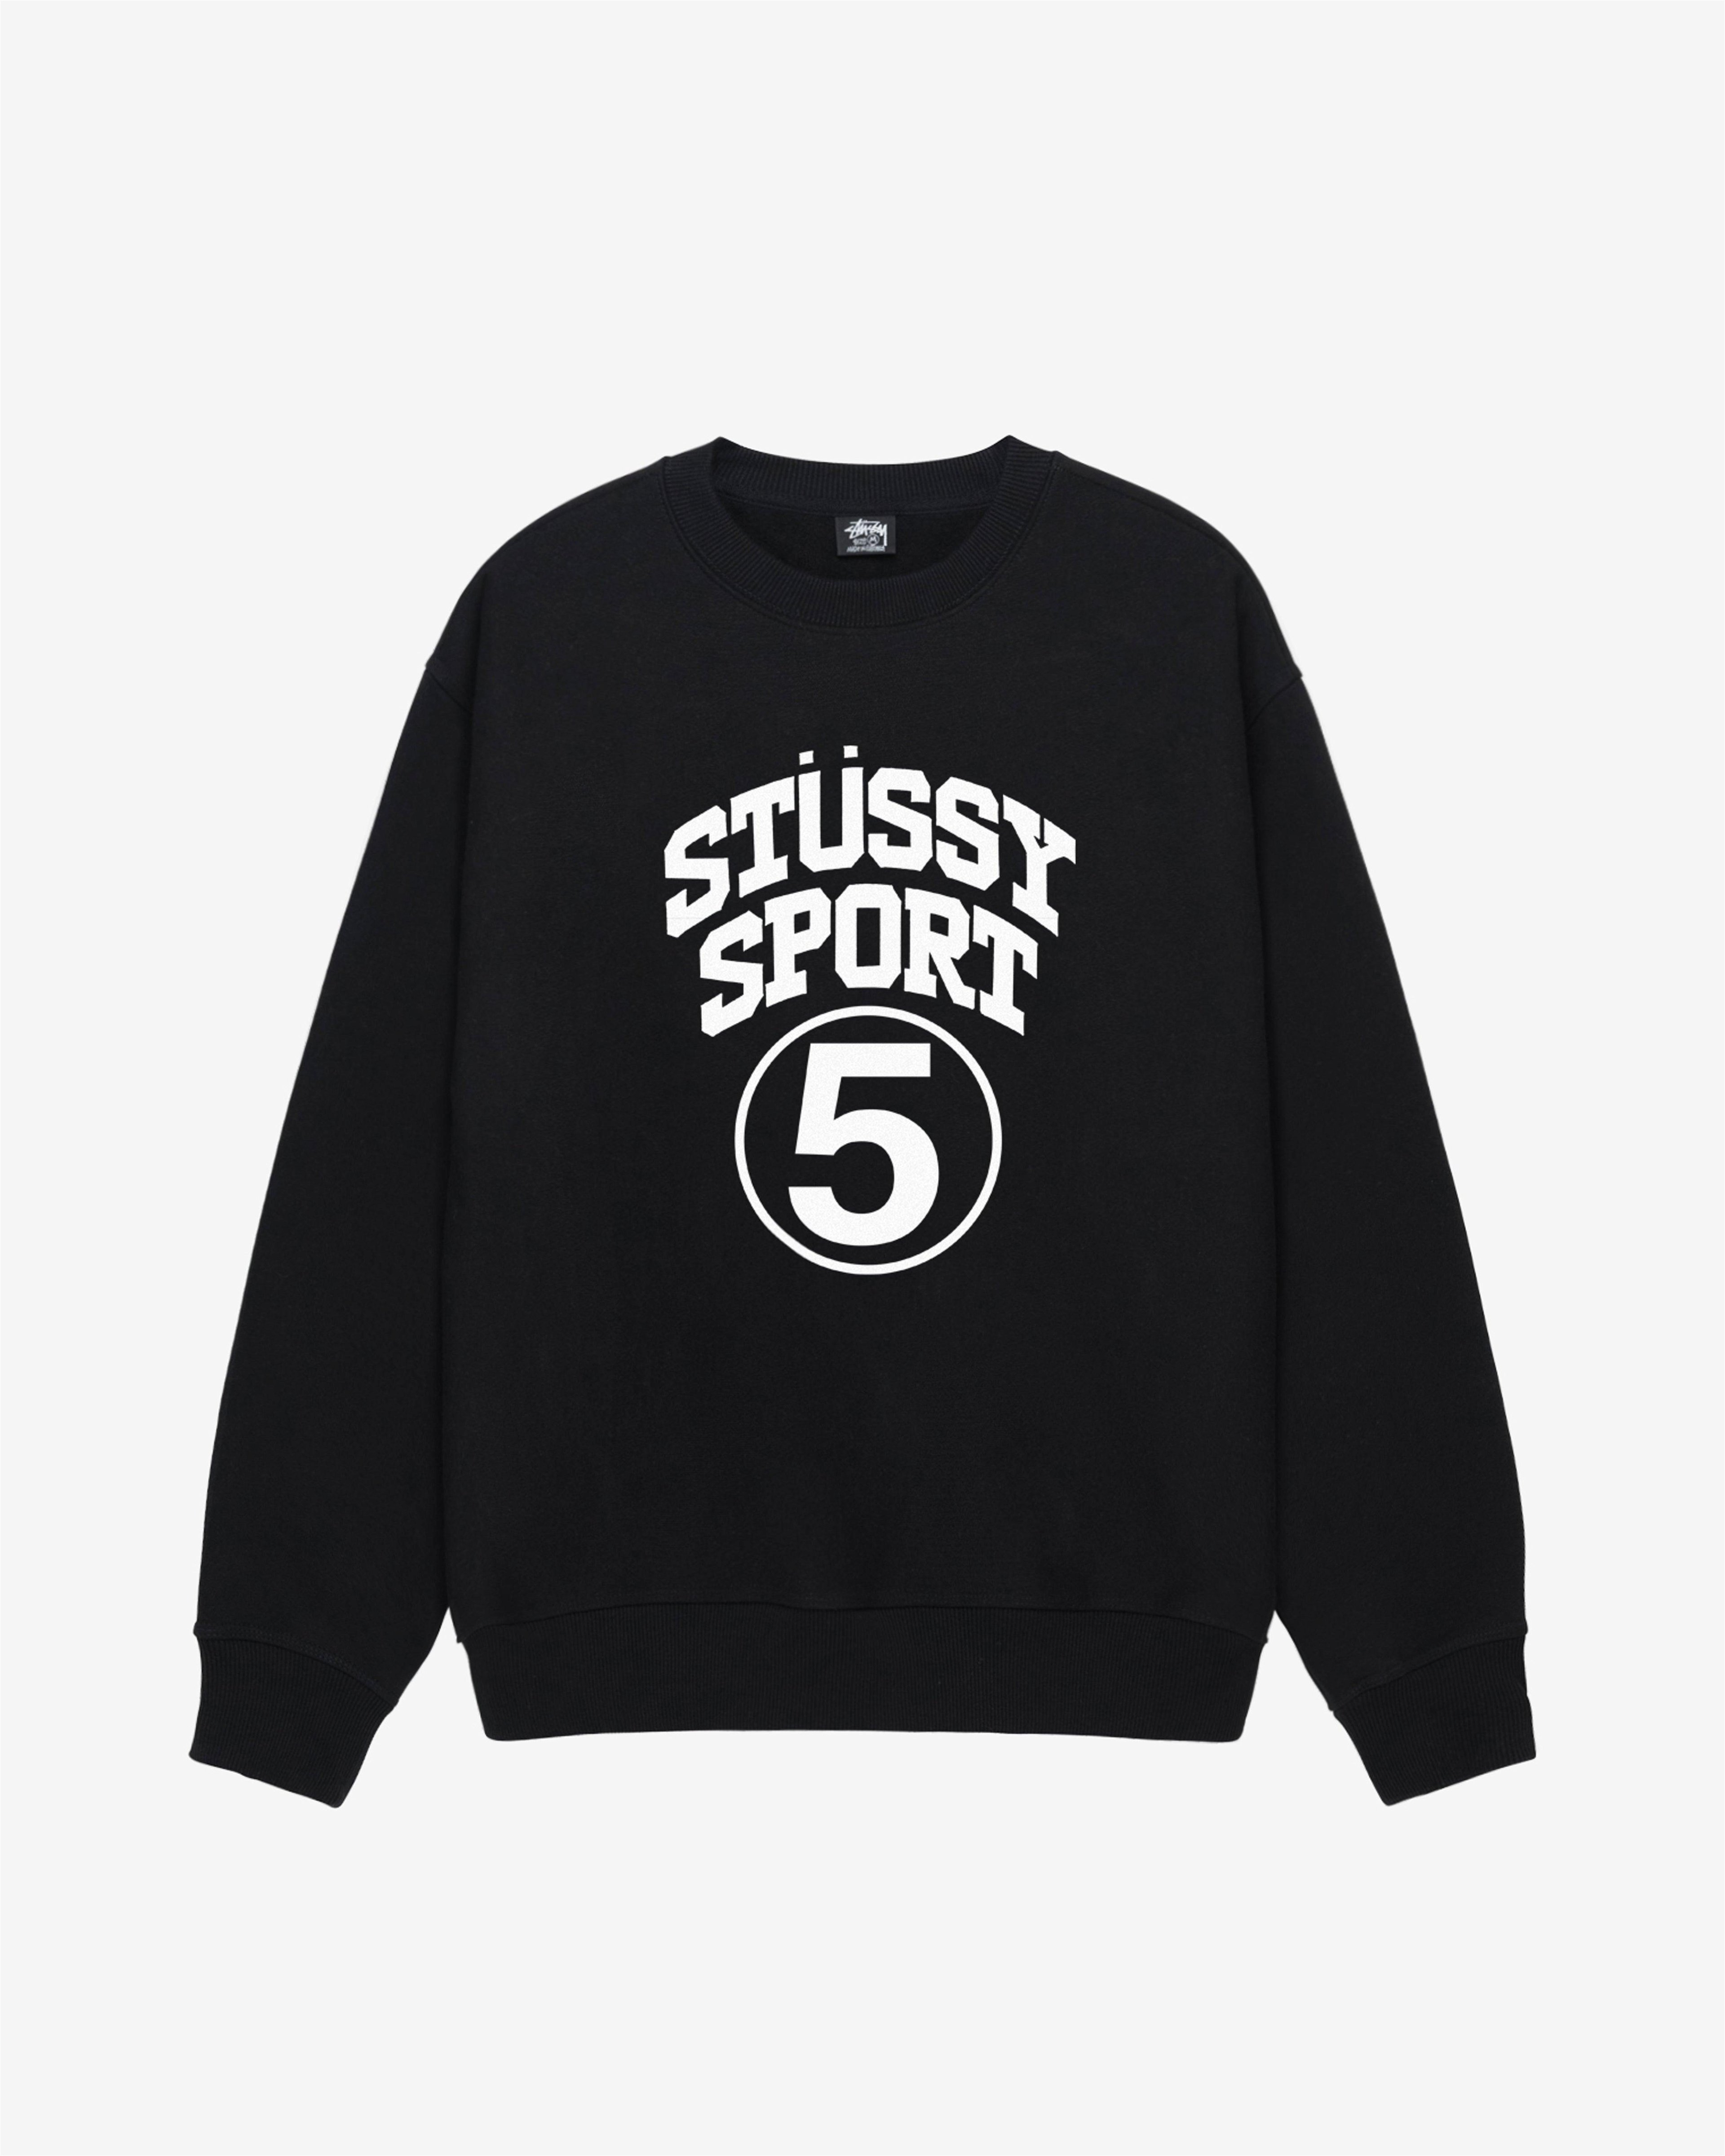 Stussy - Men's 5 Sport Crew - (Black) by STUSSY